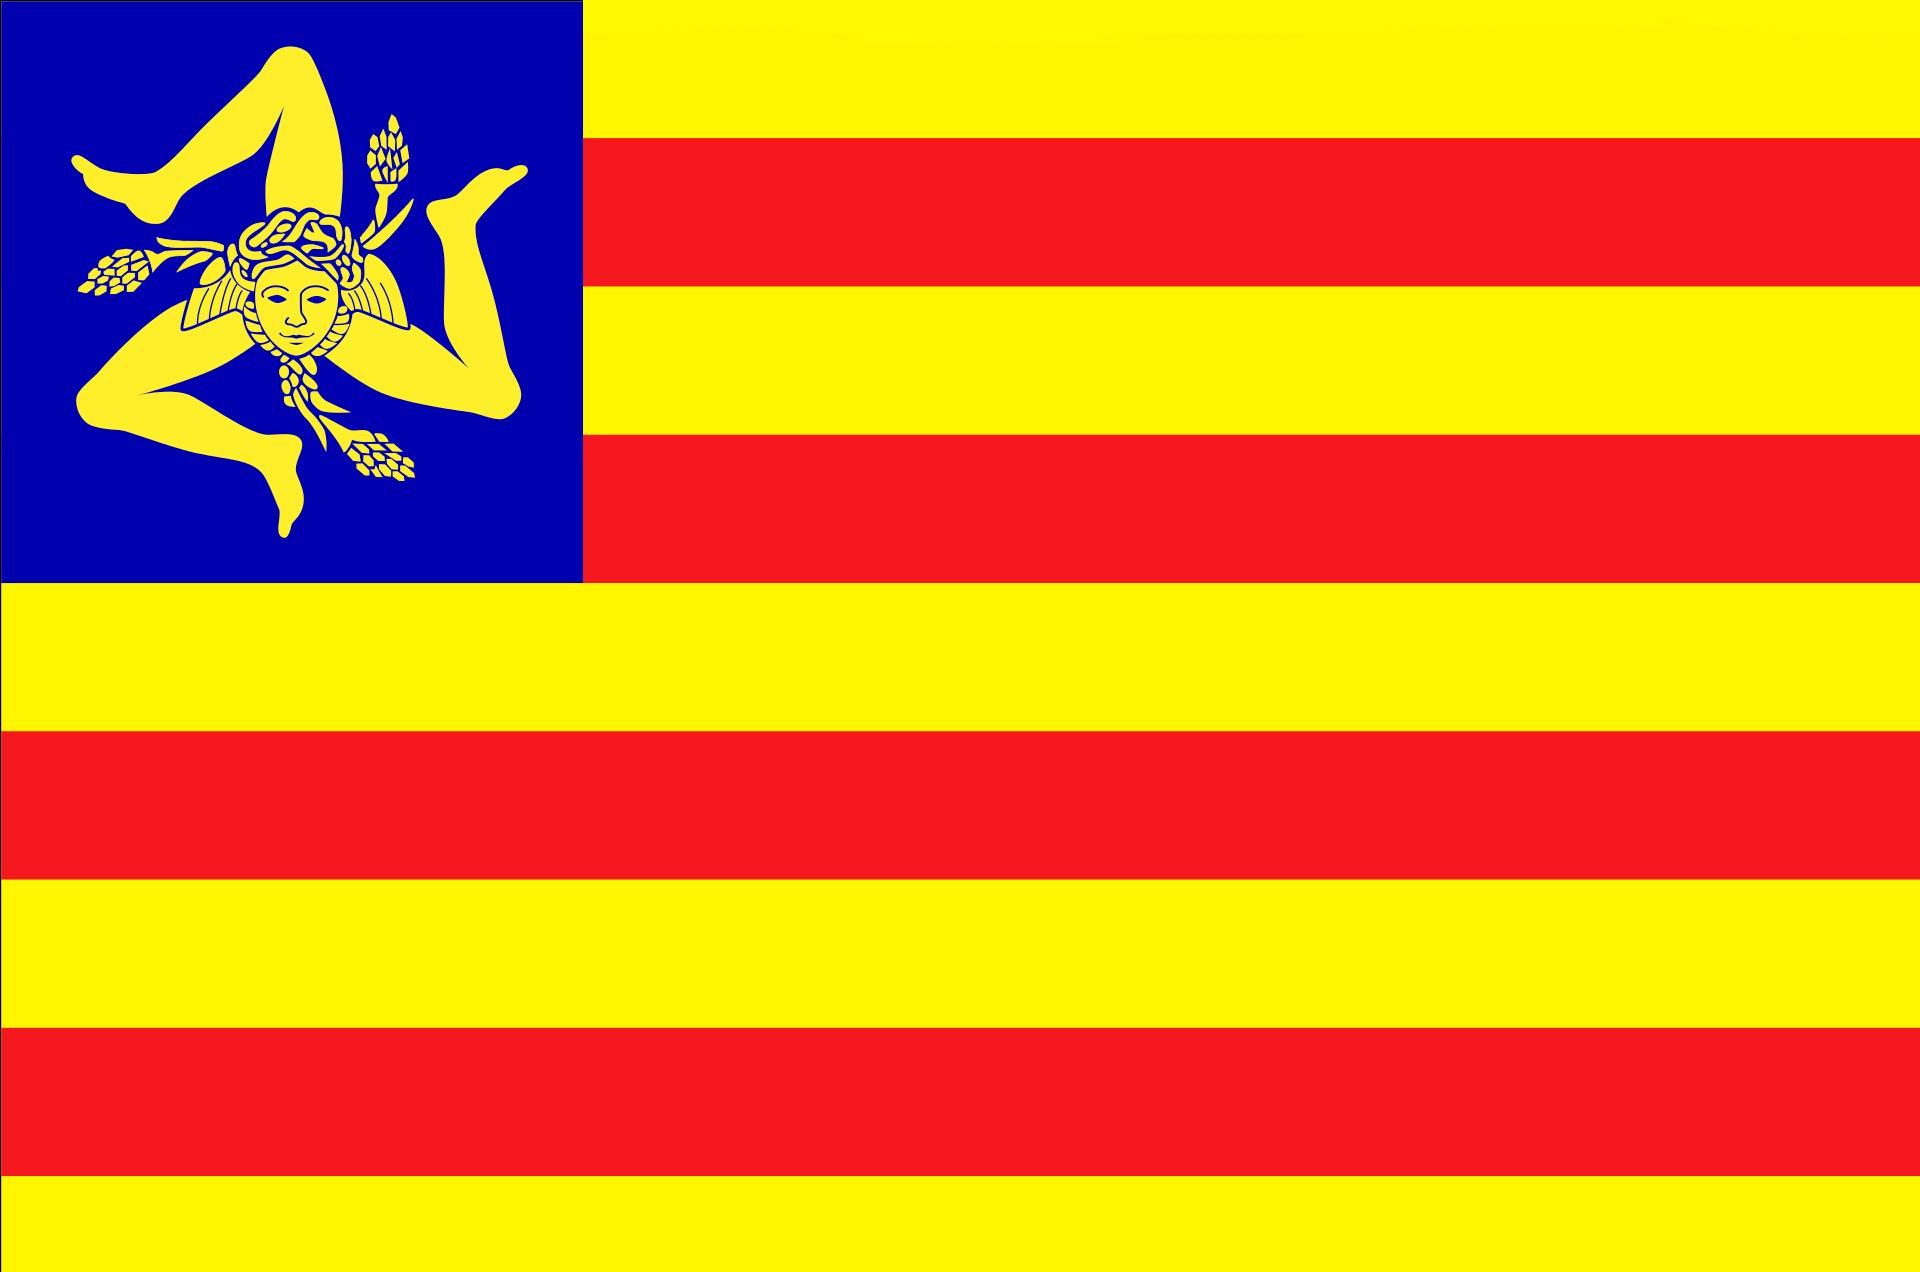 Sicily nacionalistic flag